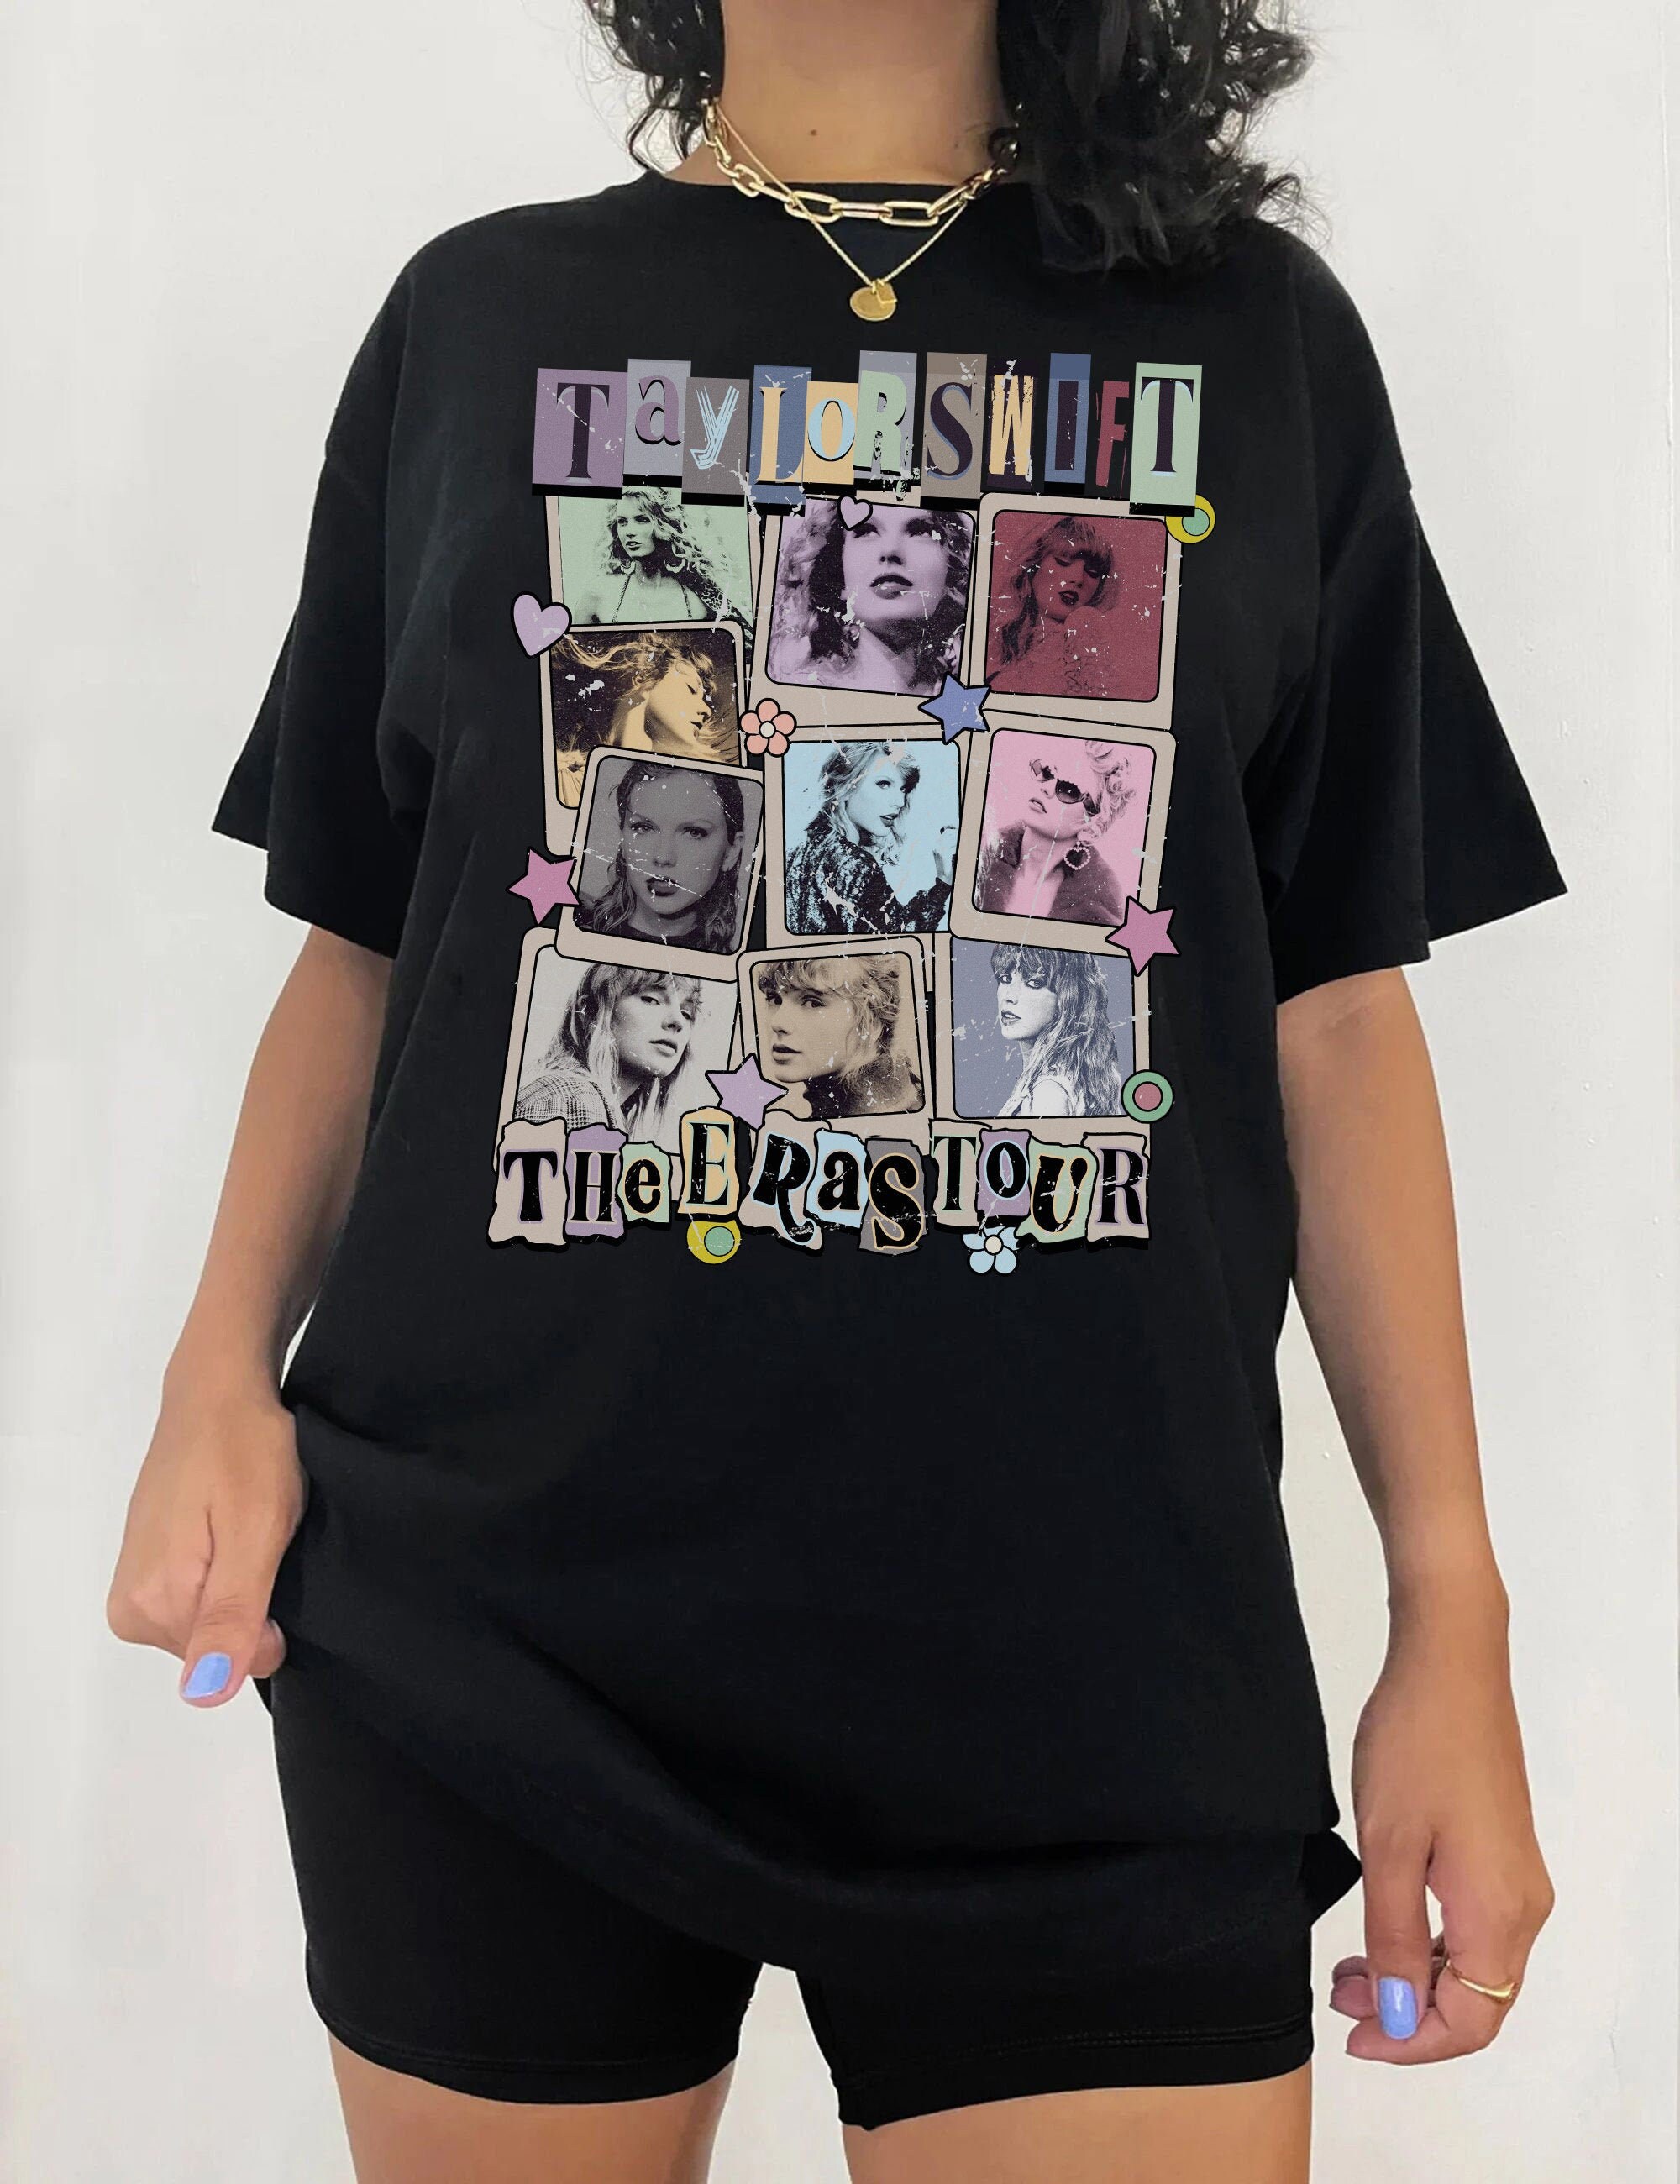 Retro Taylor the Eras Tour Shirt TS Eras Tour Shirt - Etsy